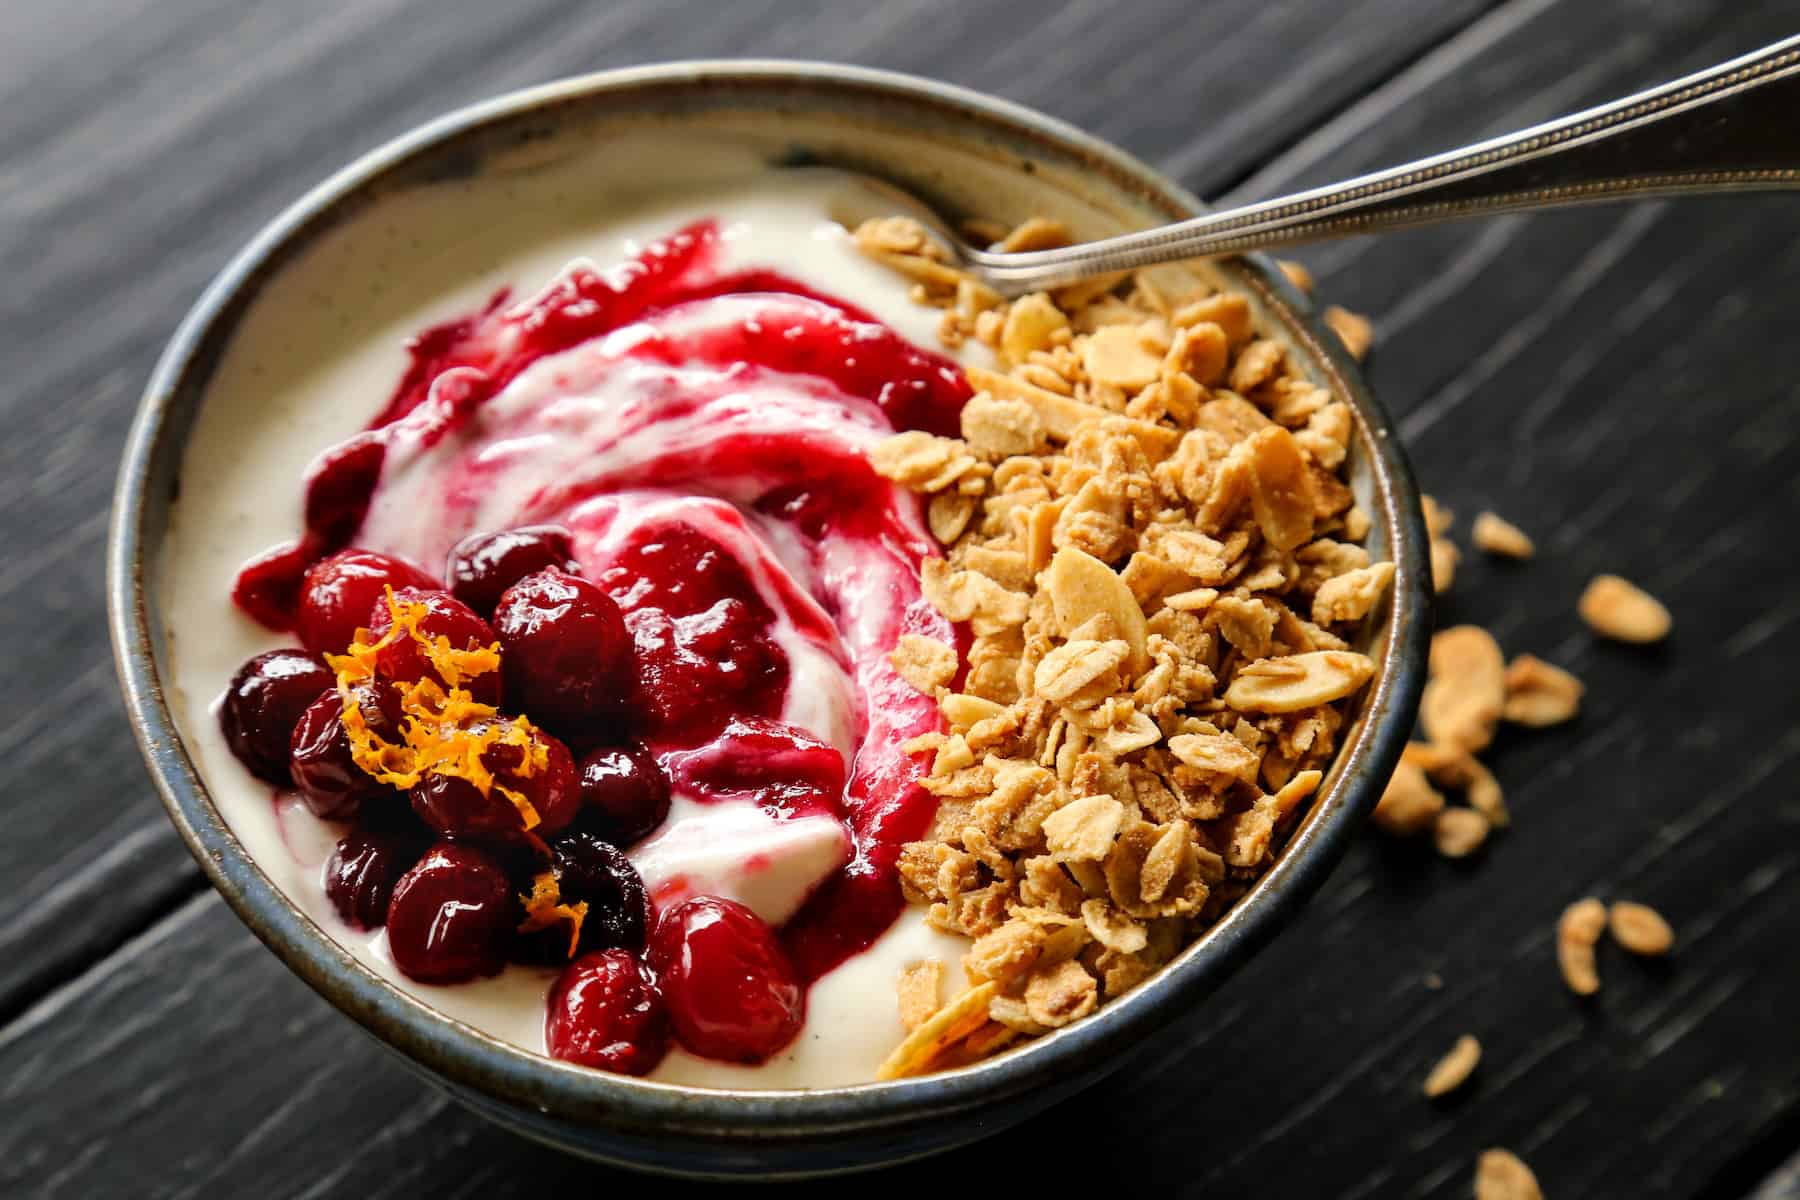 Leftover cranberries stirred into yogurt